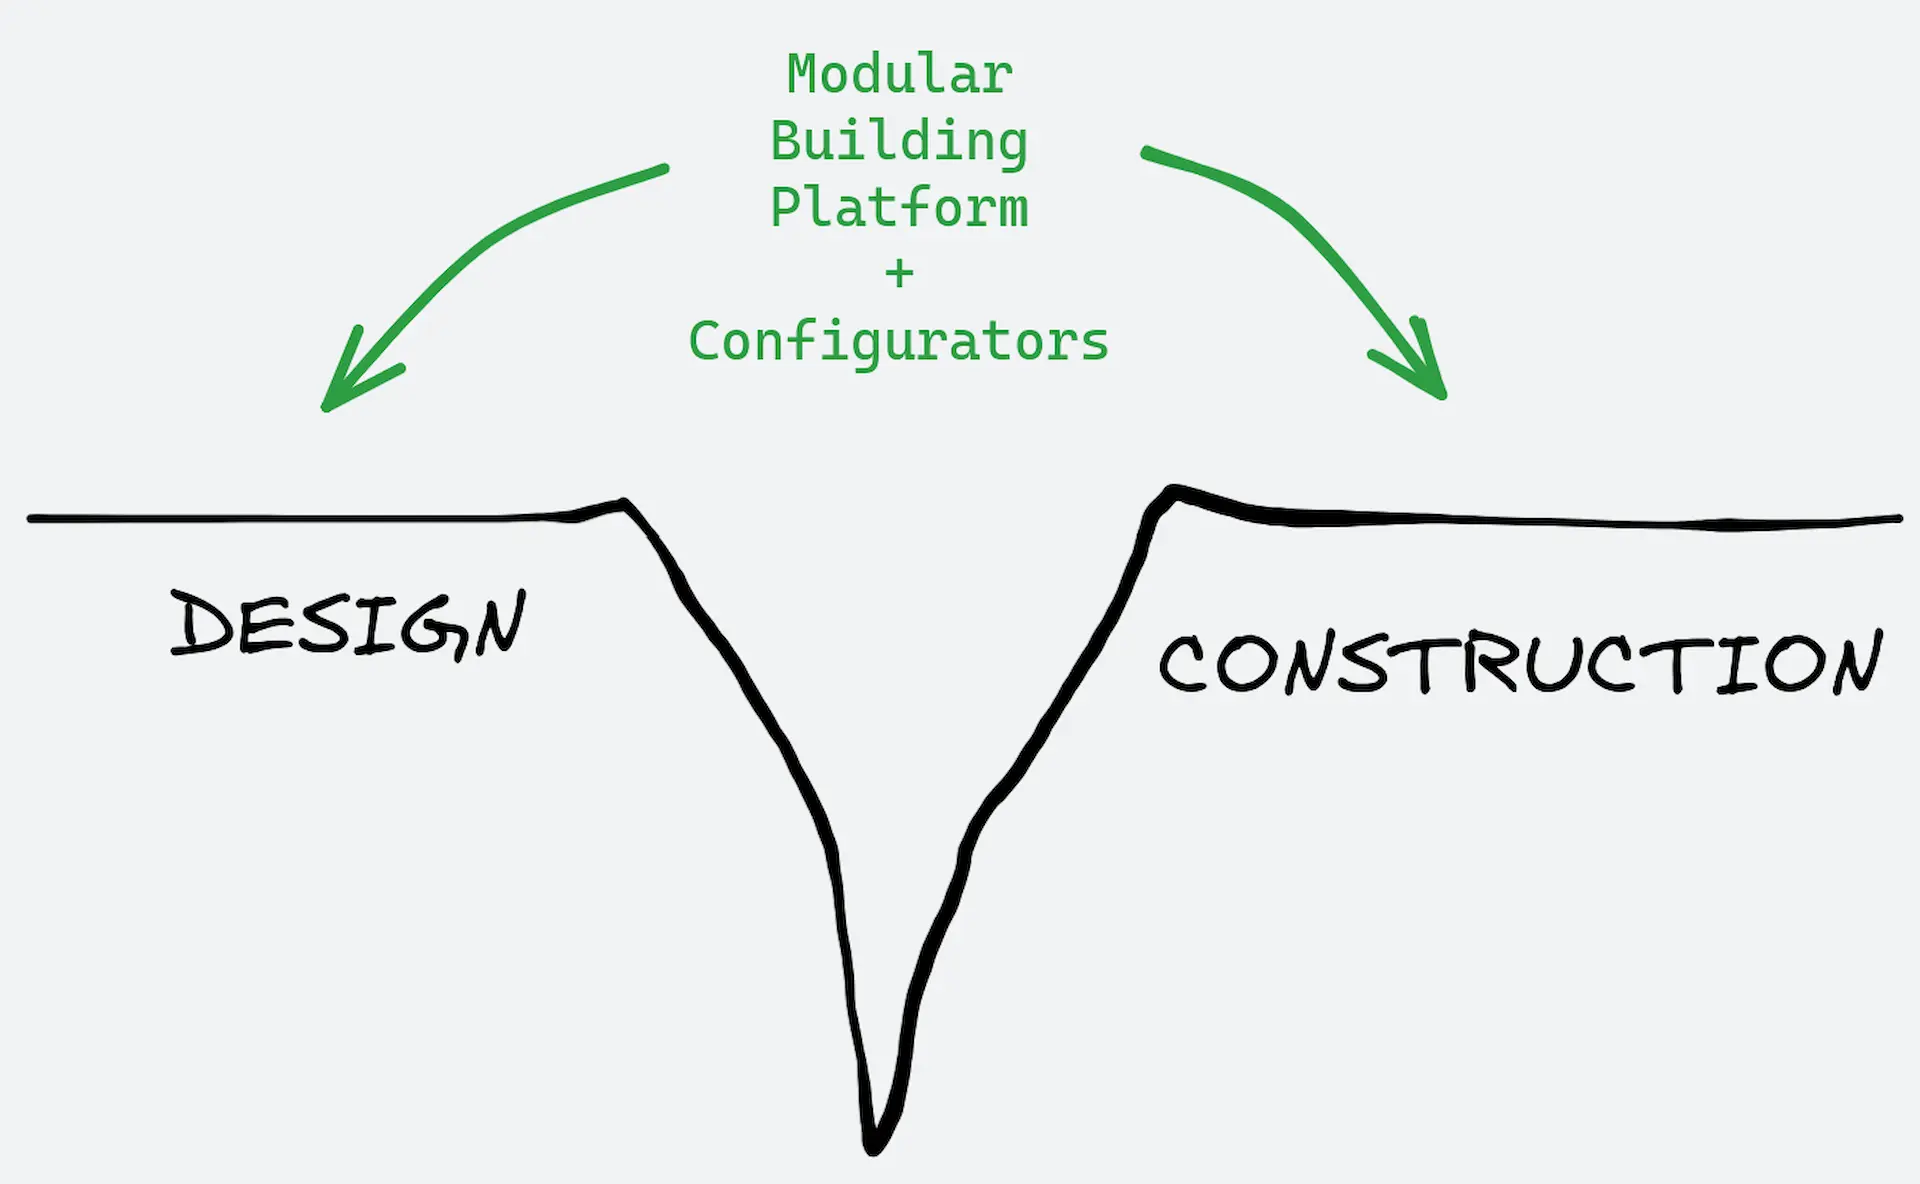 Gap between design and construction